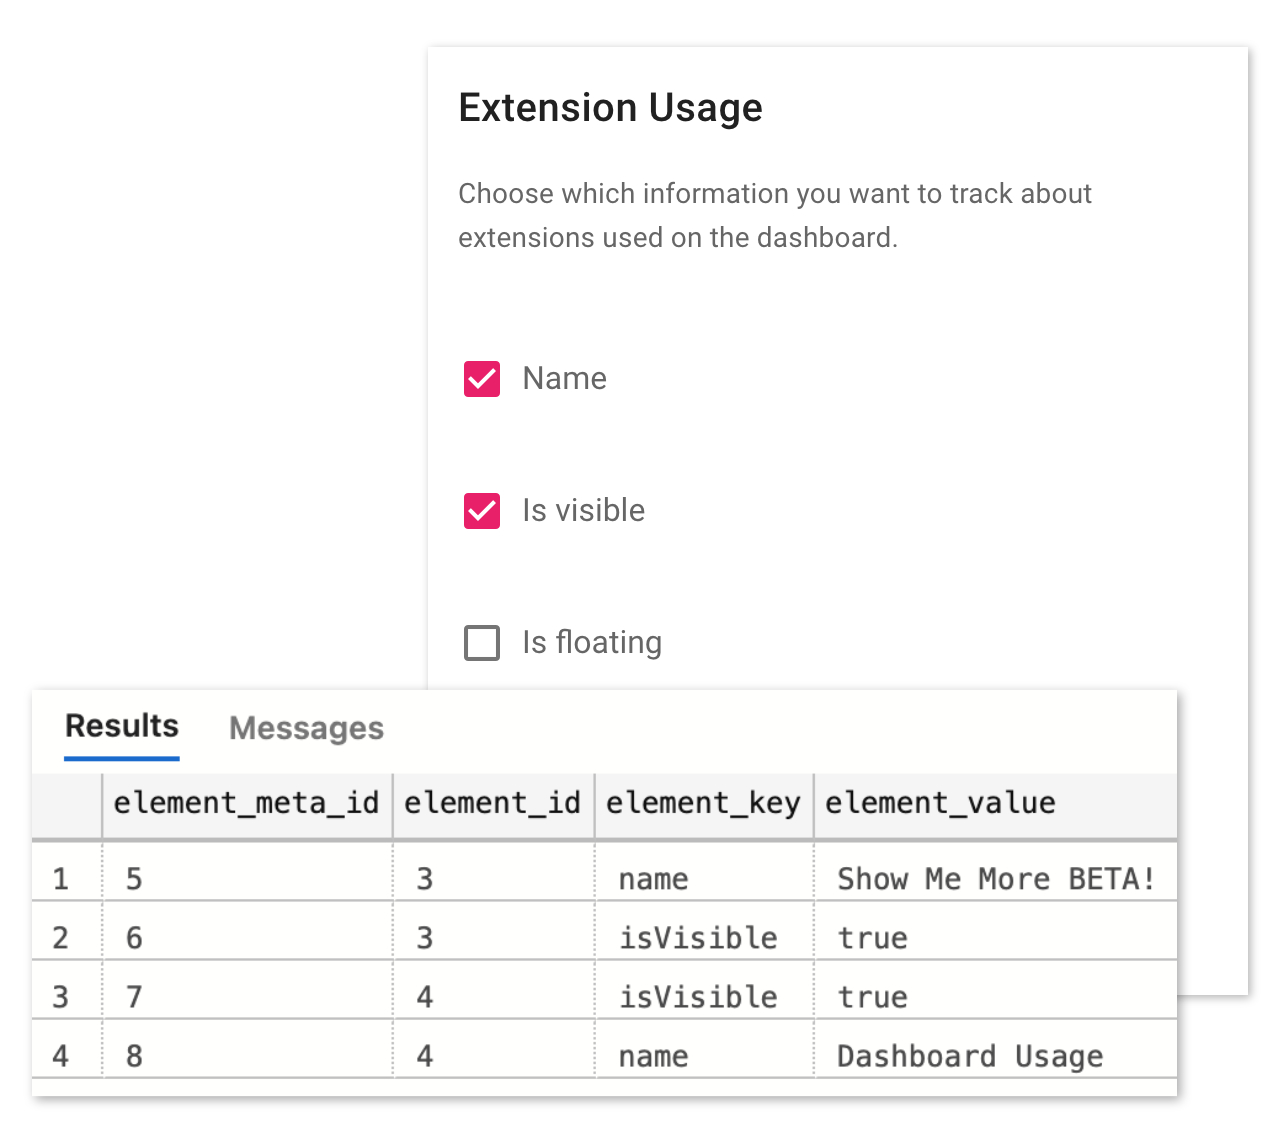 Extension usage